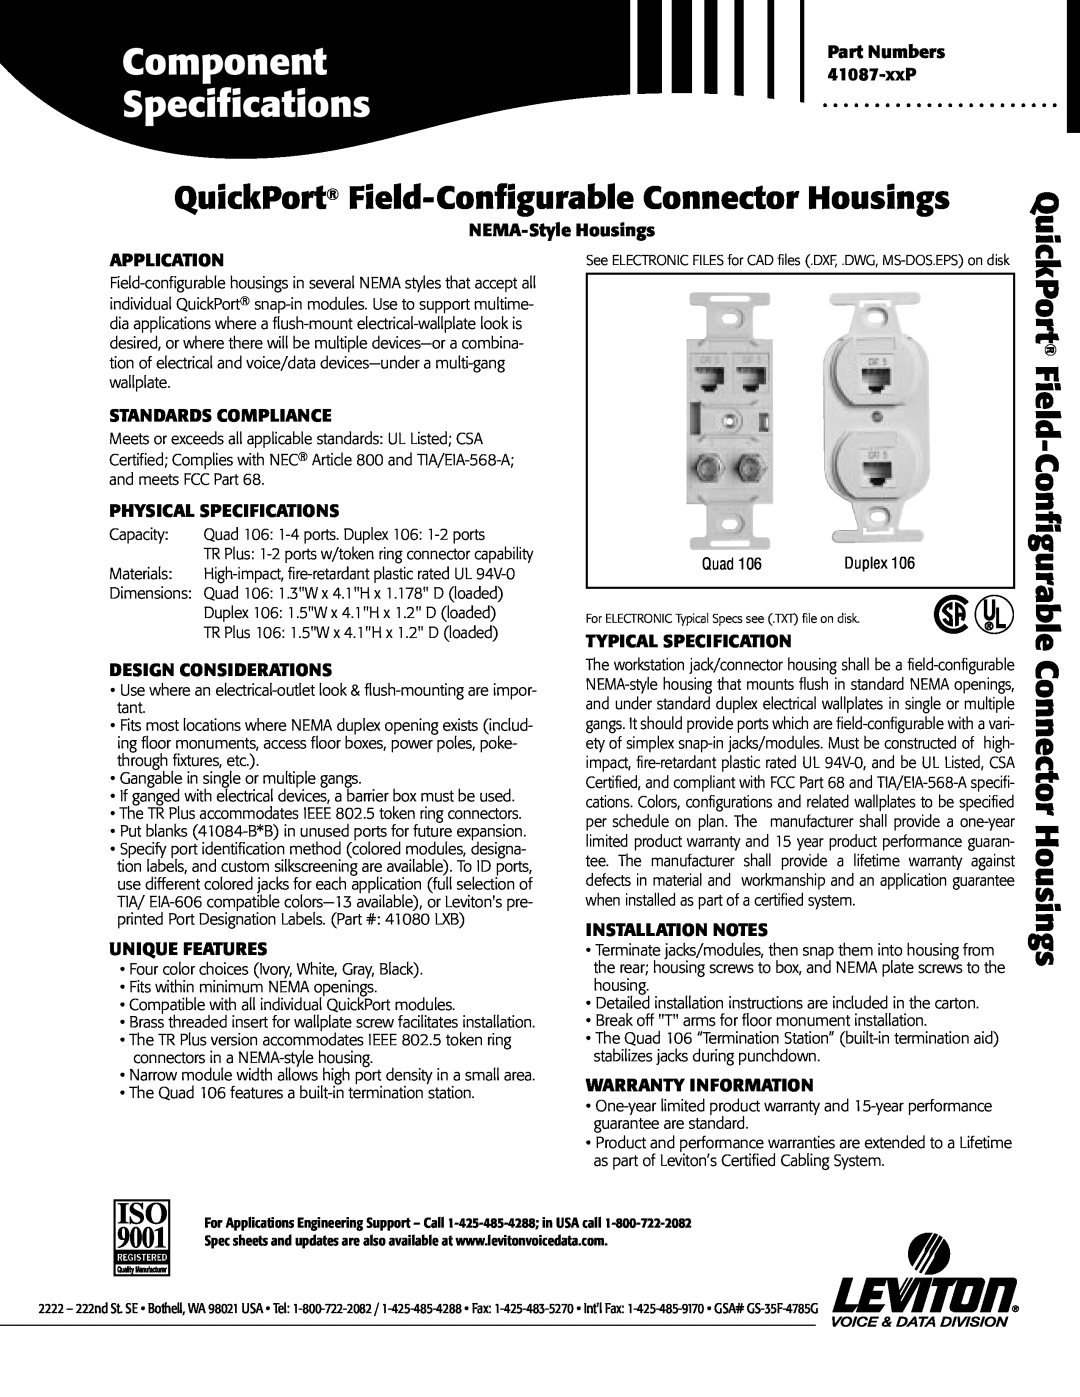 Leviton Duplex 106, Quad 106 warranty QuickPort Field-Configurable Connector Housings, Component, 3880-DIN, Specifications 